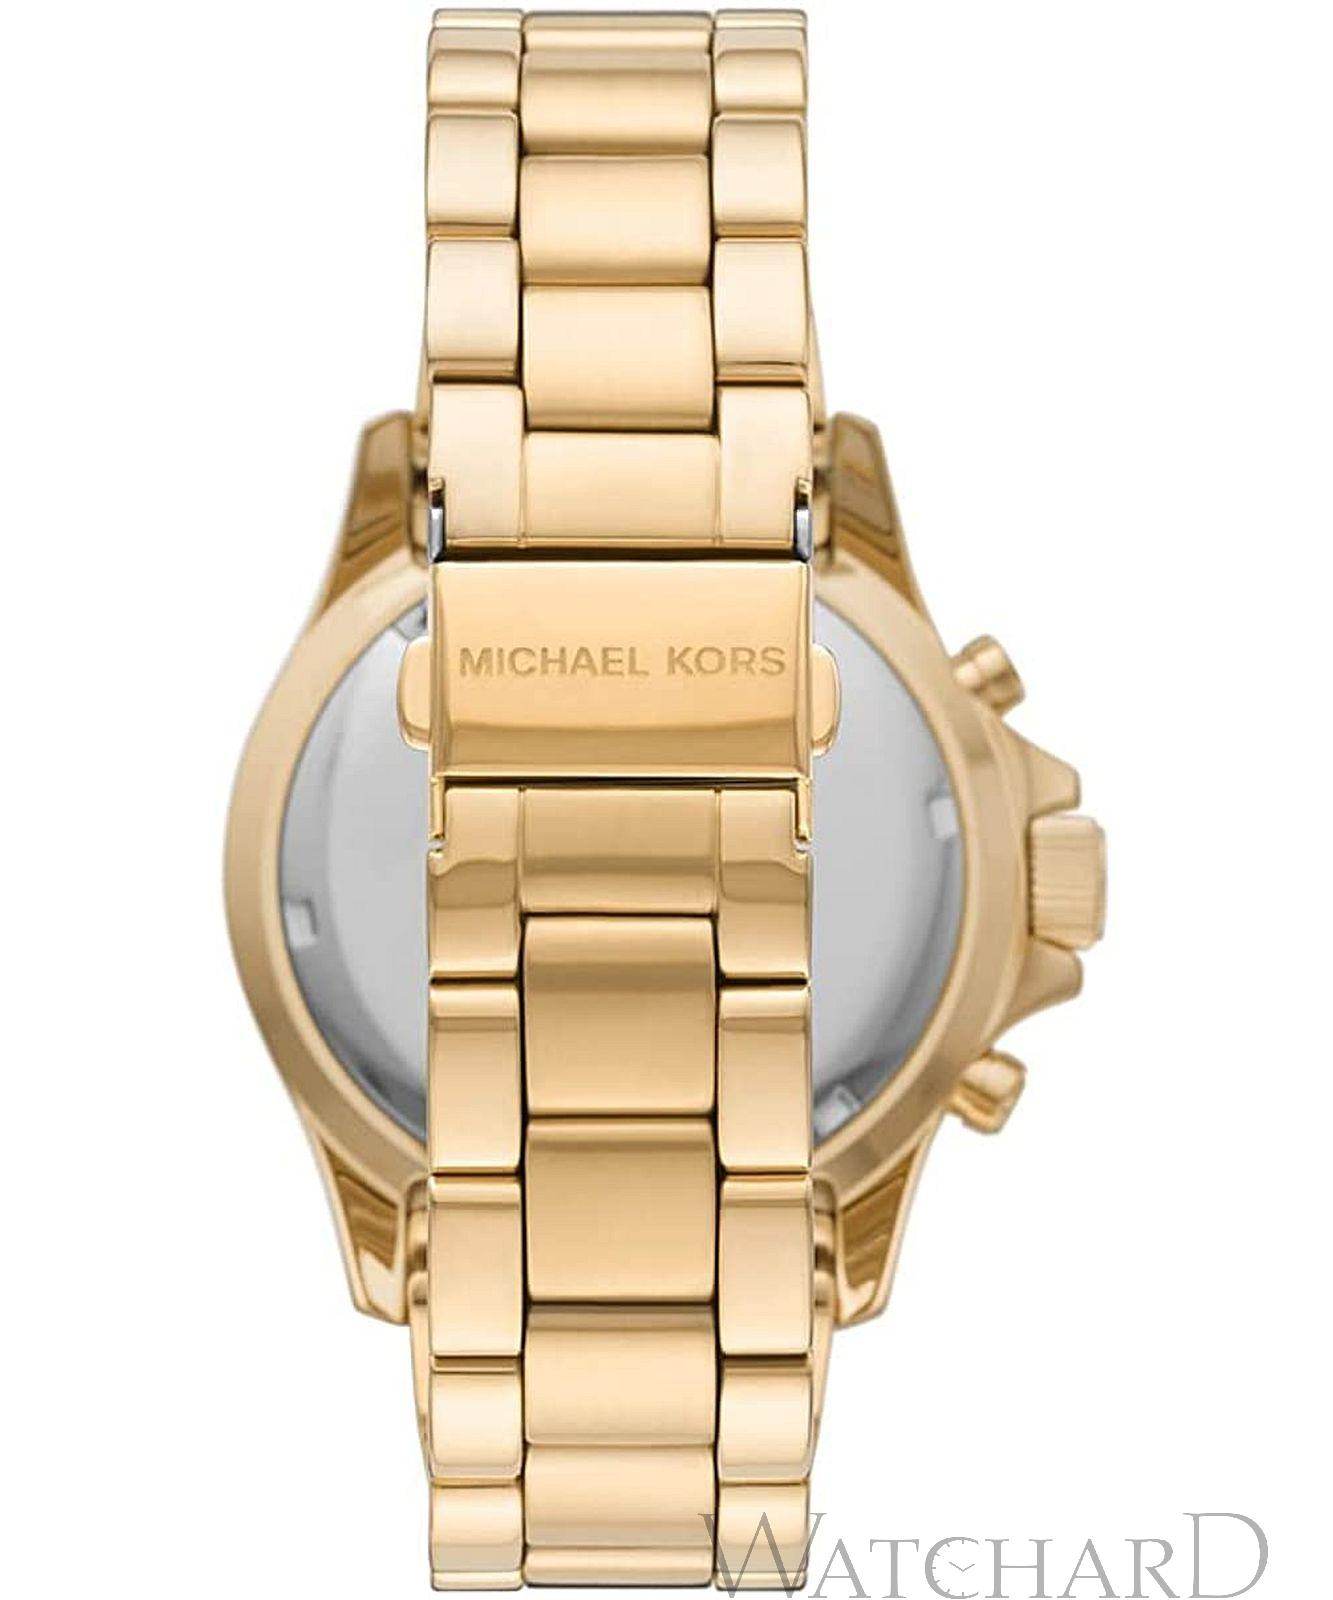 Michael Kors MK7210 - Everest Chronograph Watch • Watchard.com